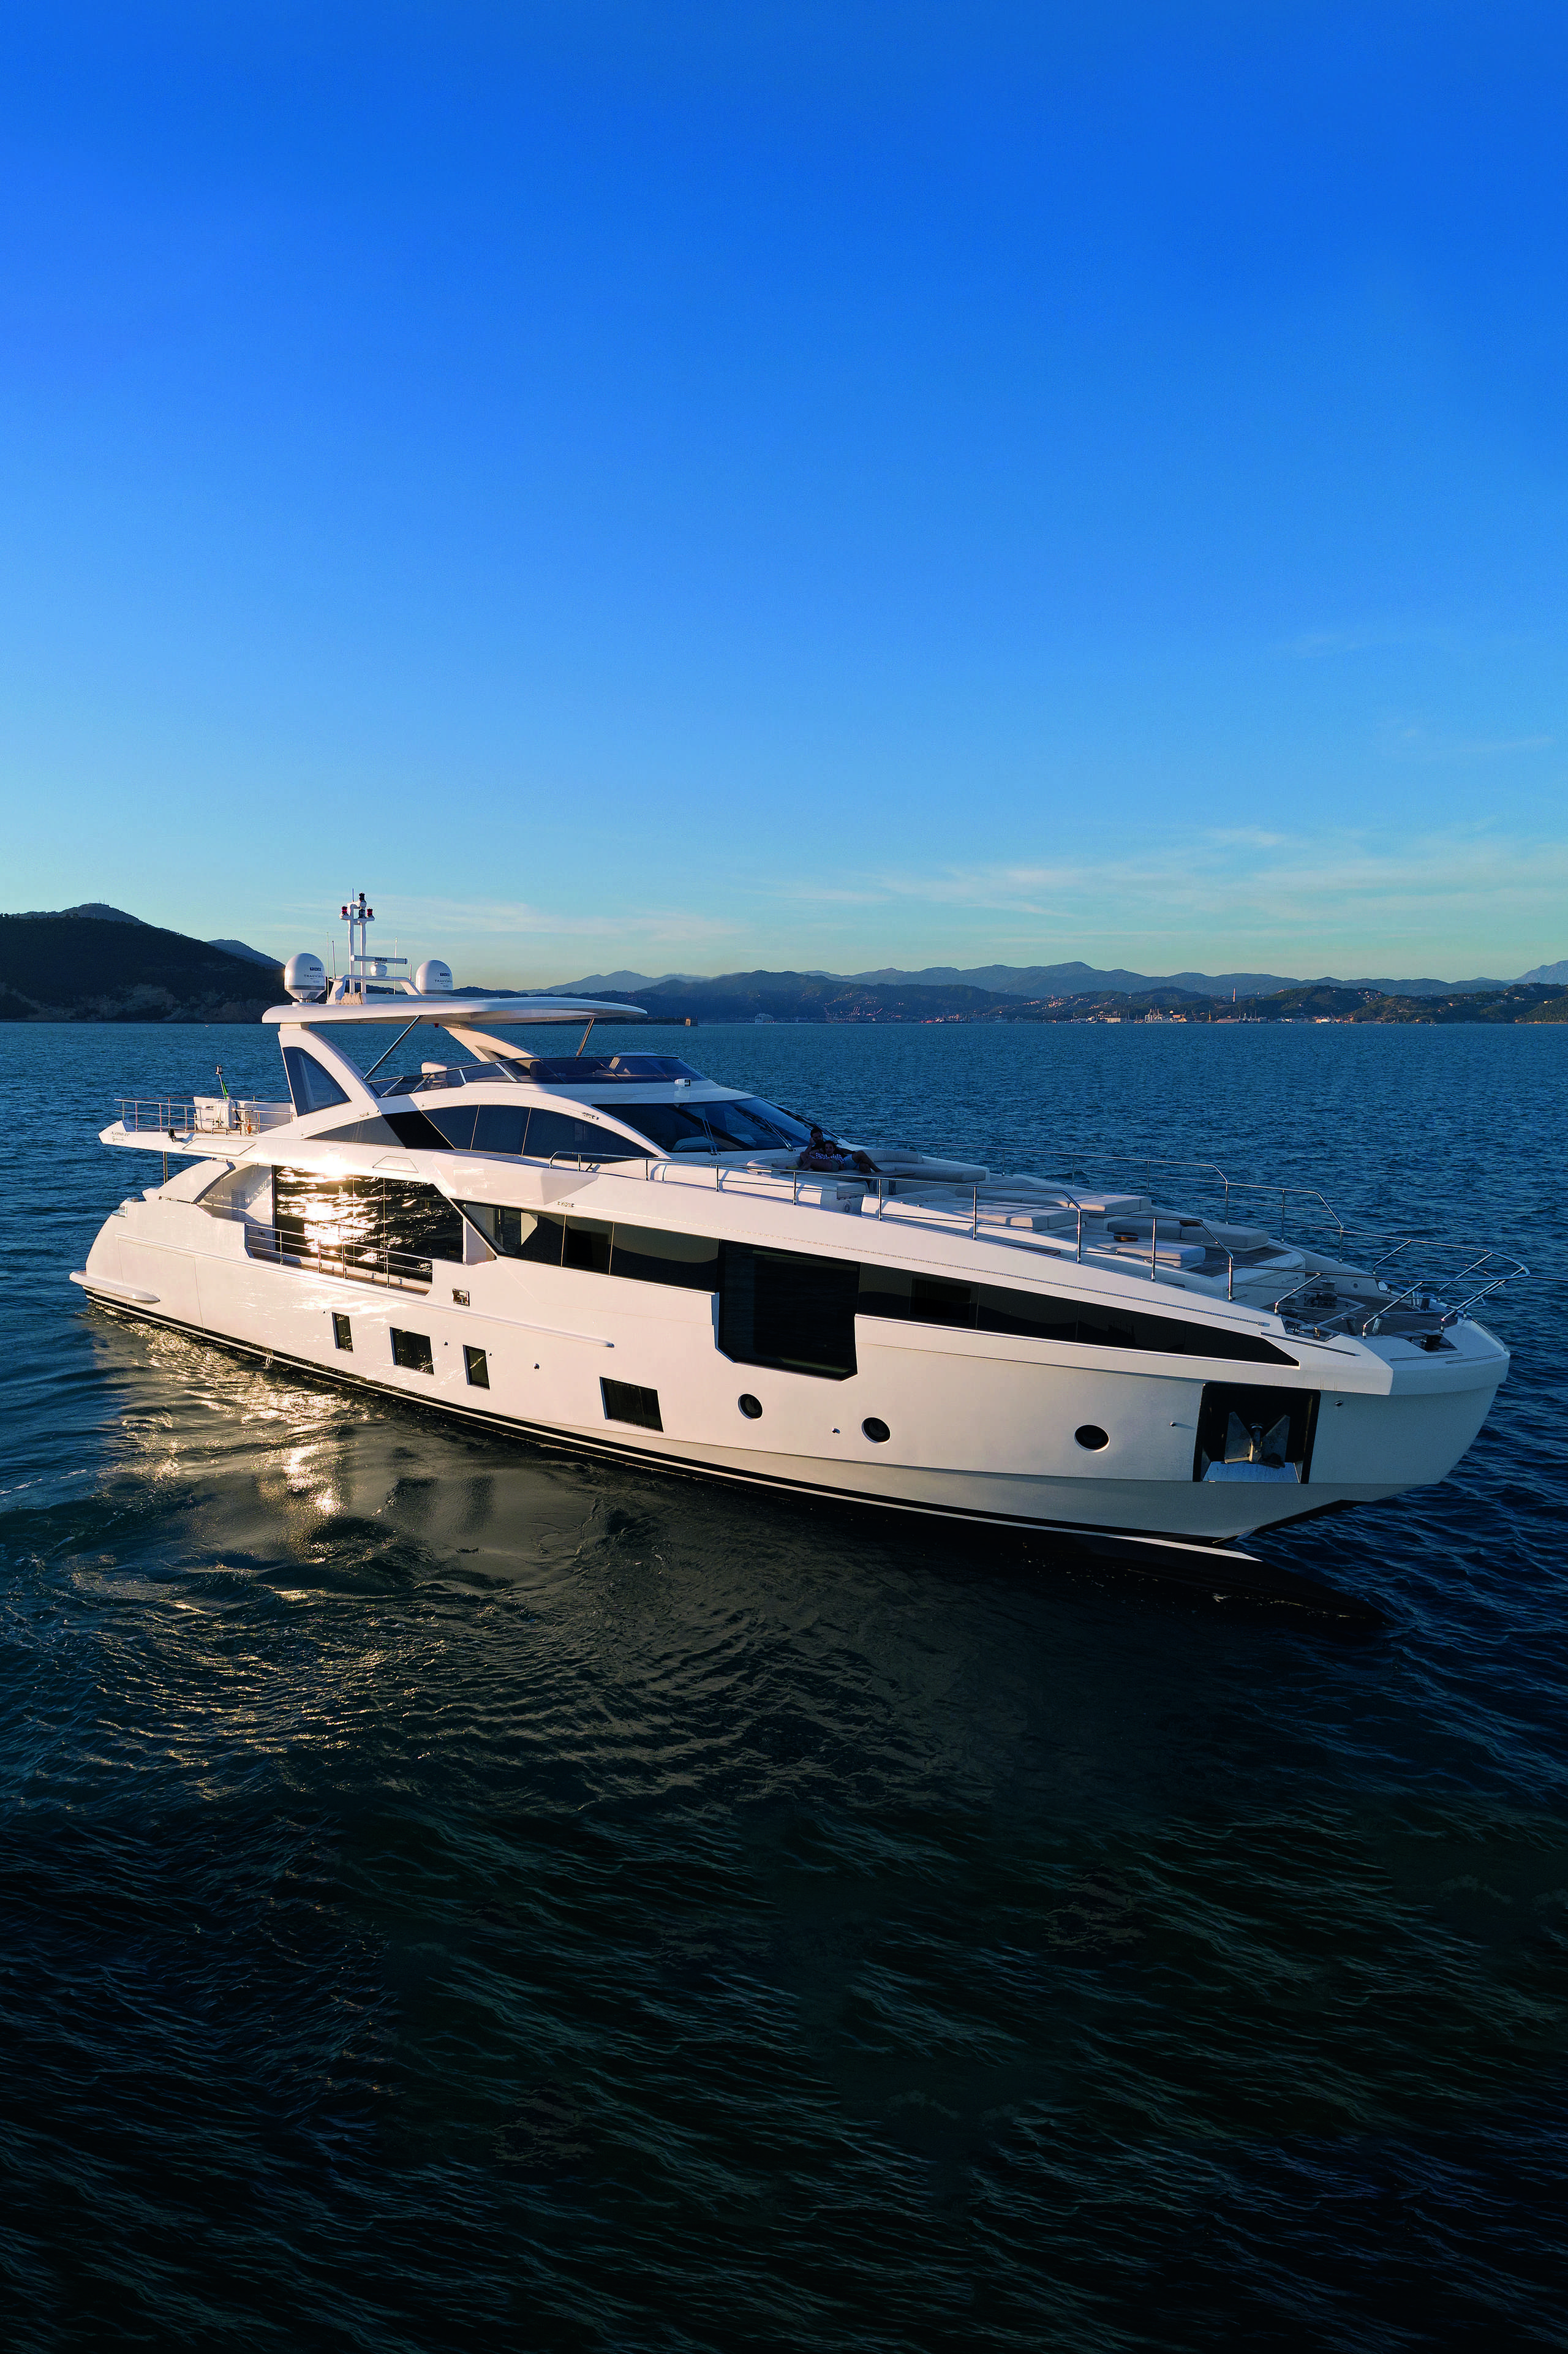 azimut yacht 32 metri for sale